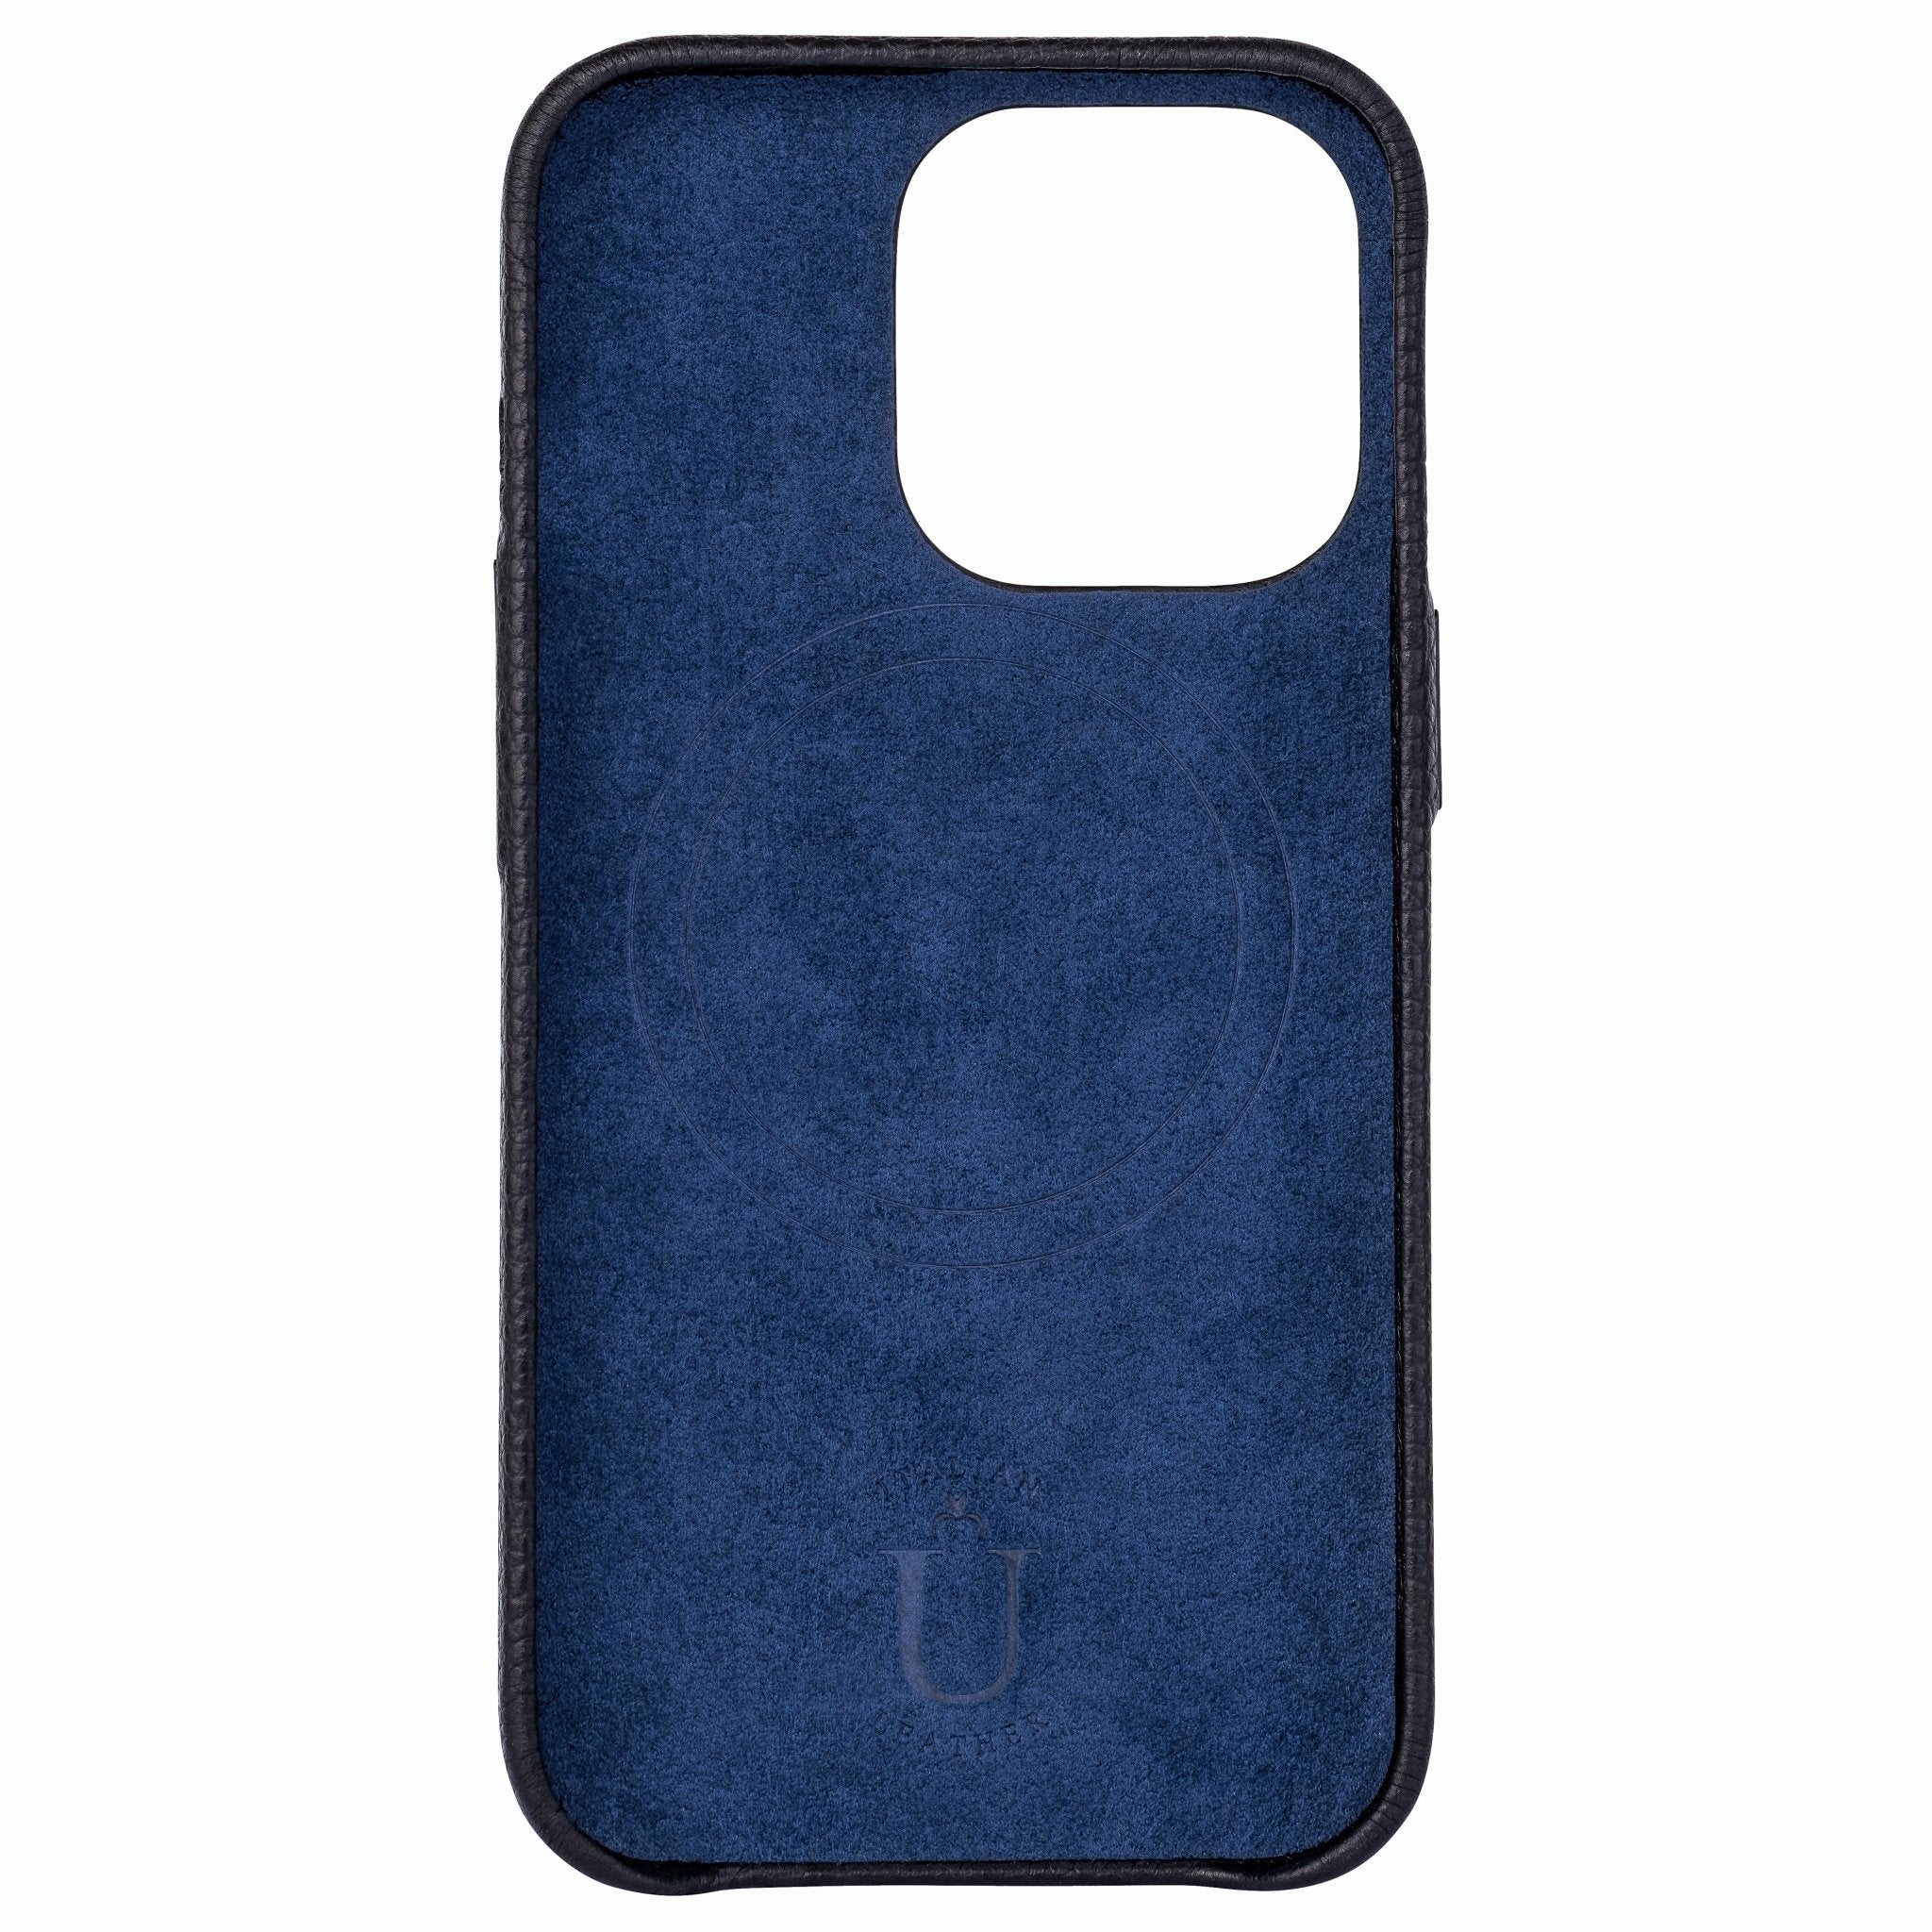 Ubique Italy Luxury iPhone Case 13 Pro Pebble Grain Leather Black Inner Lining